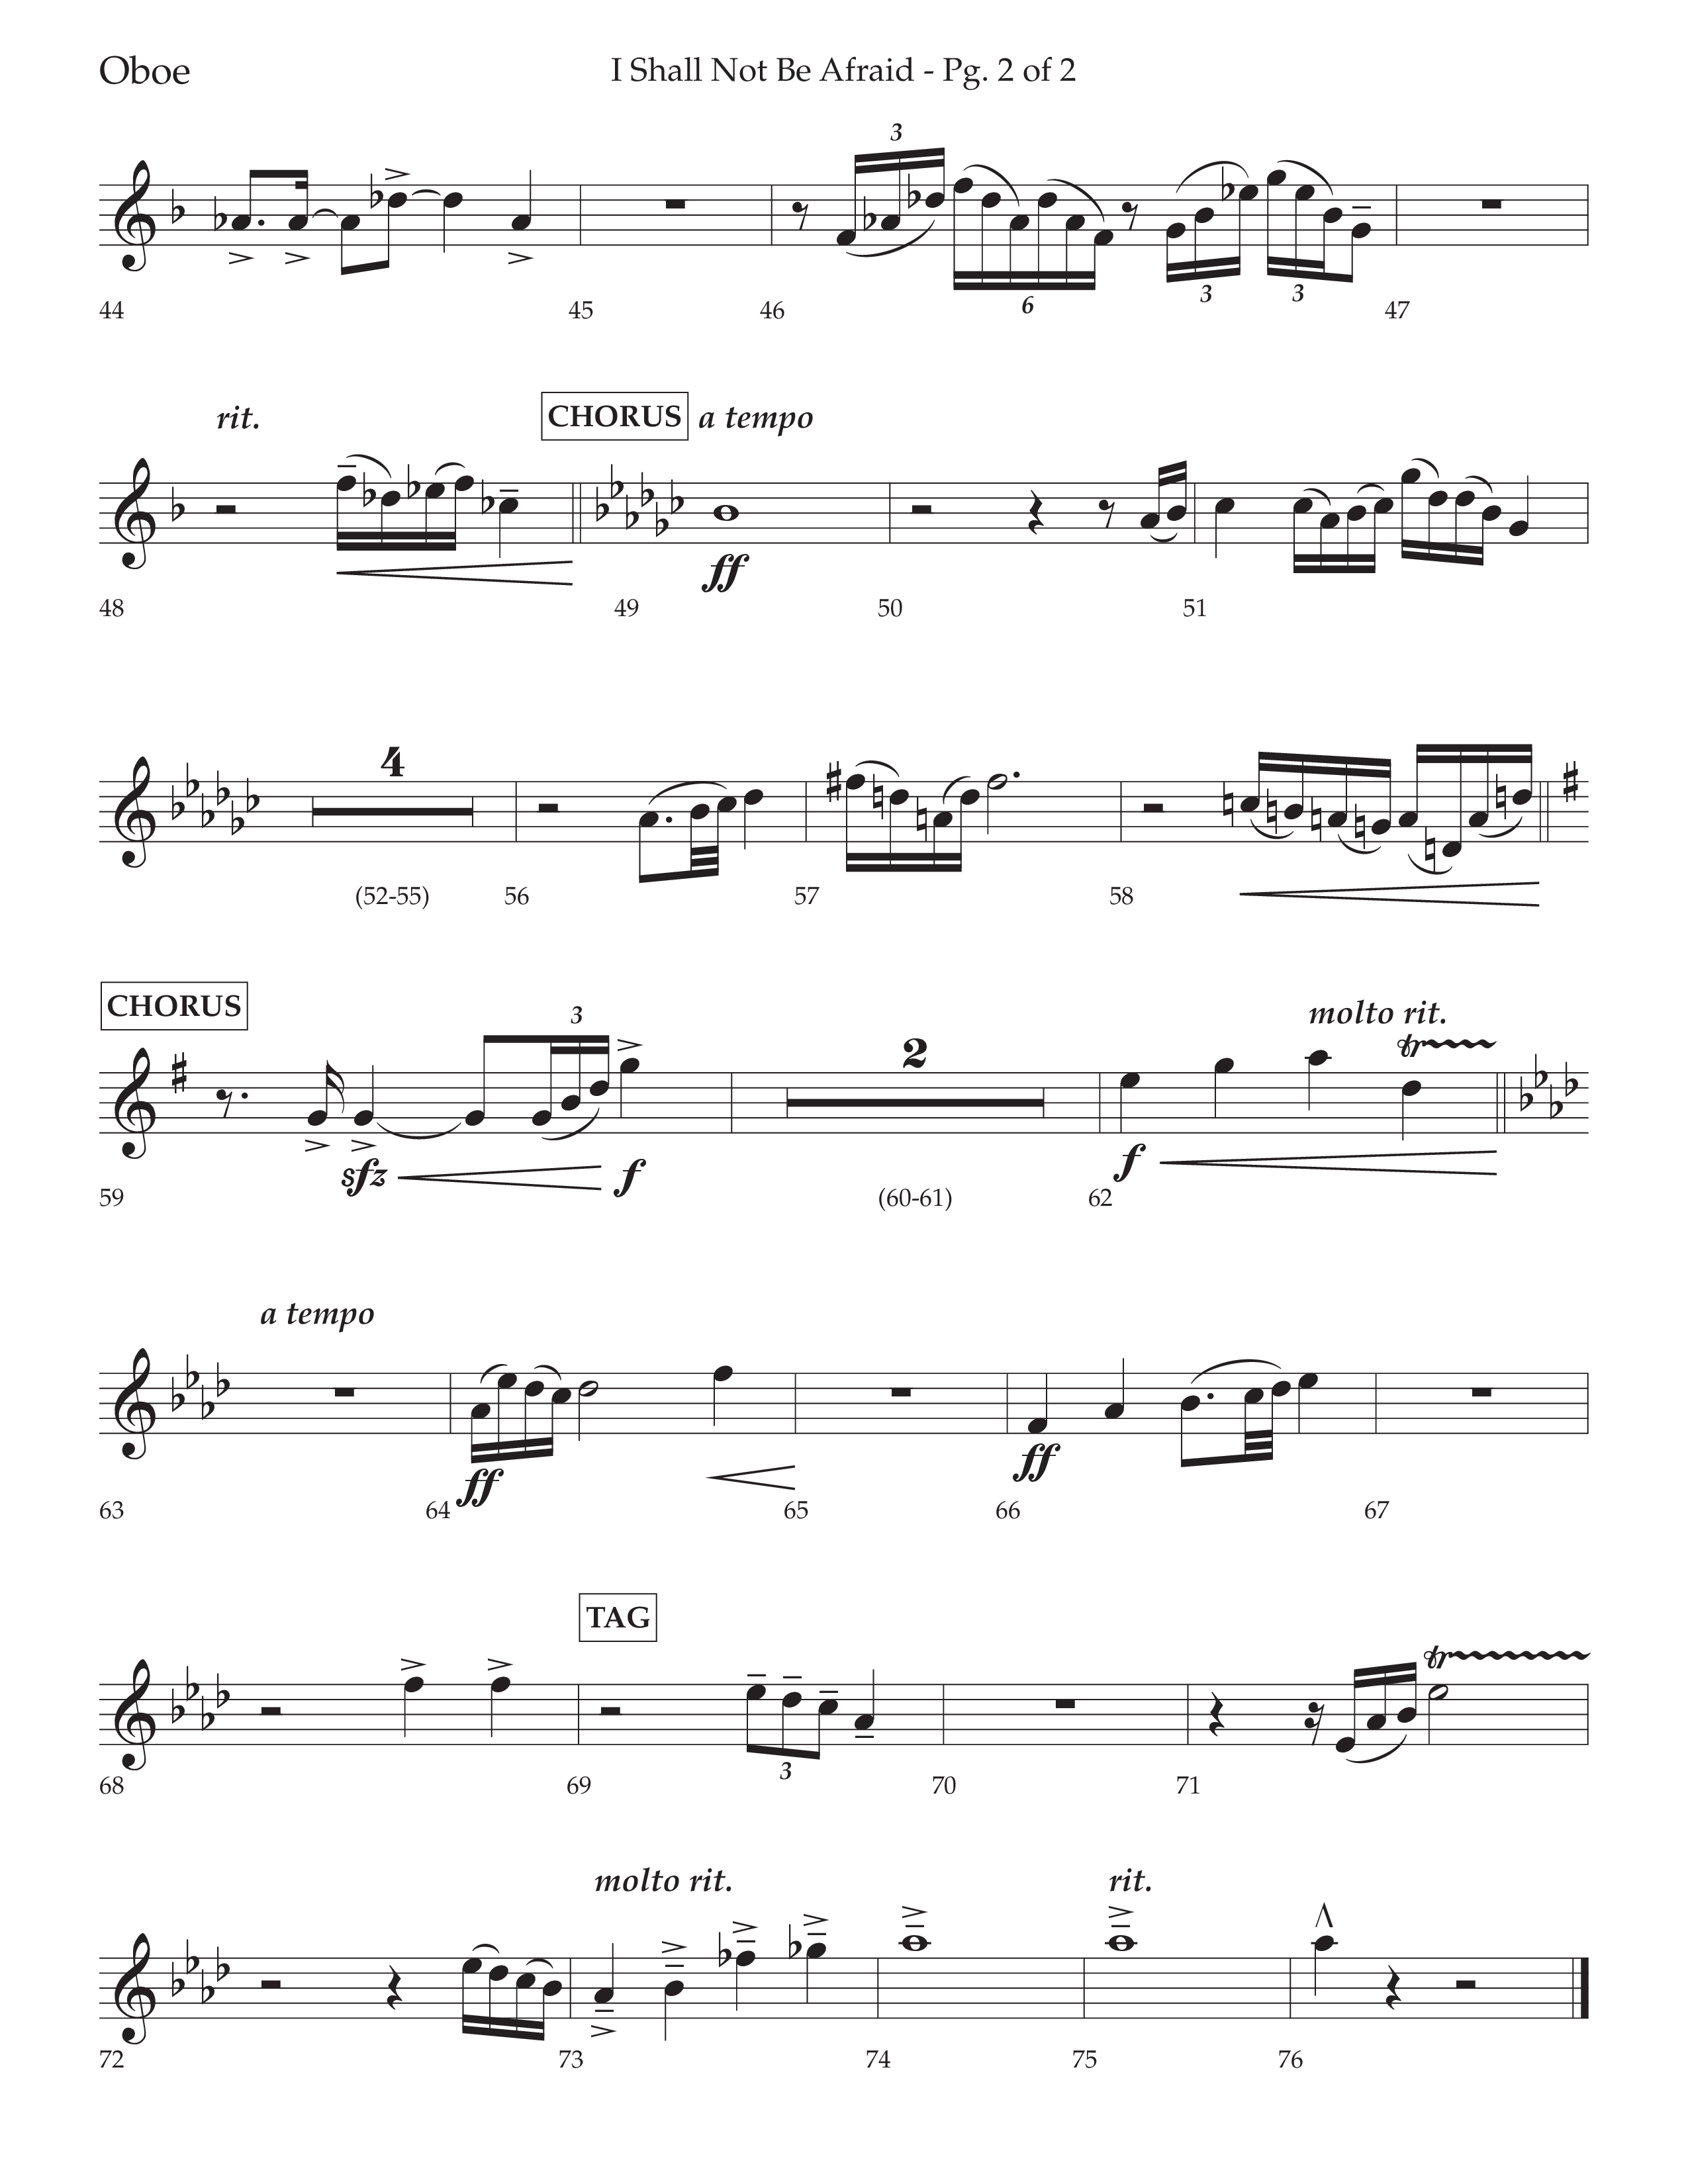 I Shall Not Be Afraid (Choral Anthem SATB) Oboe (Lifeway Choral / Arr. Cliff Duren)